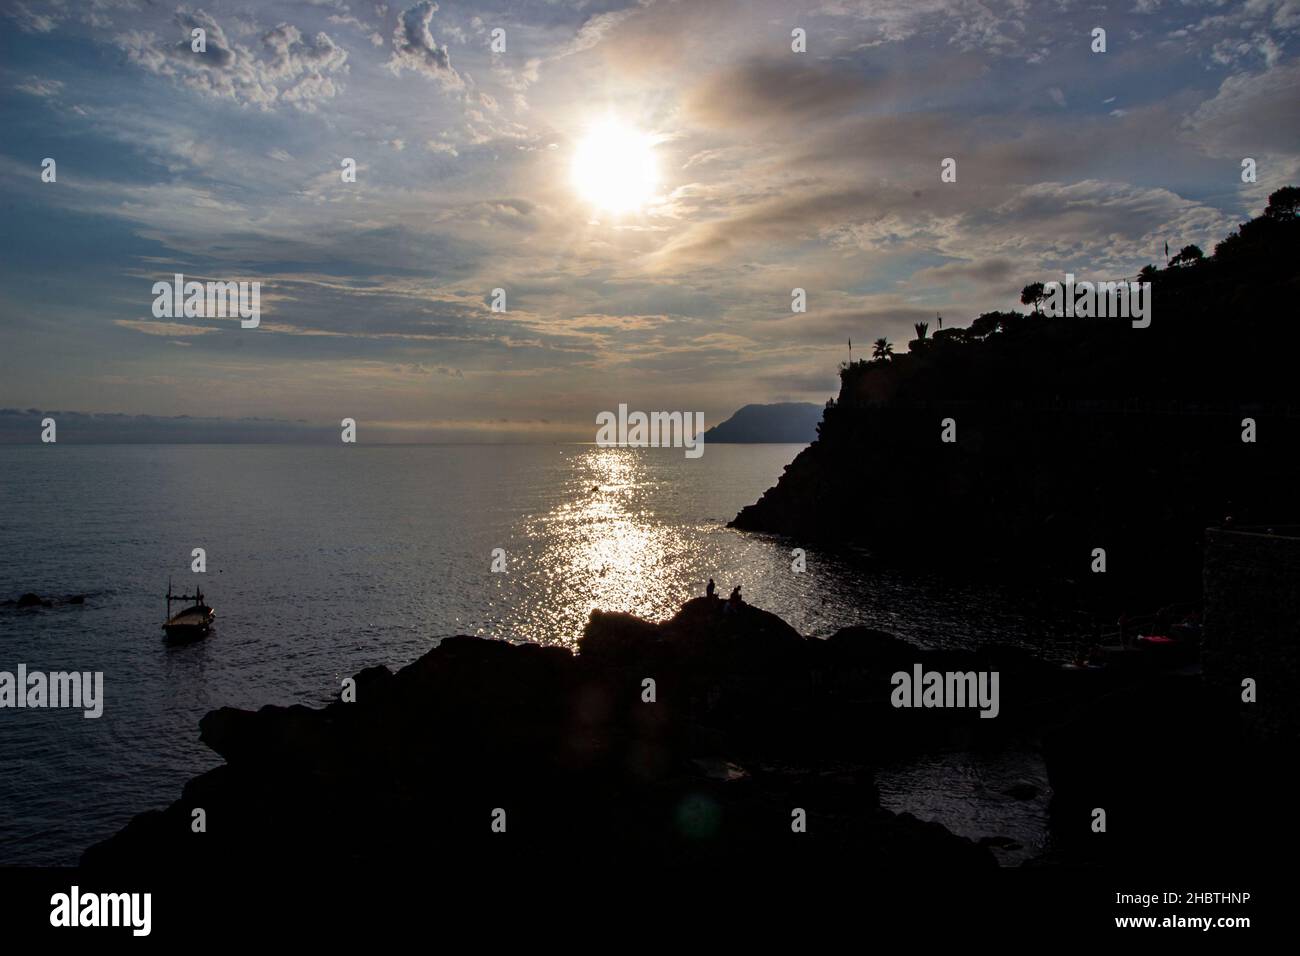 Exploring the Italian coastline Stock Photo